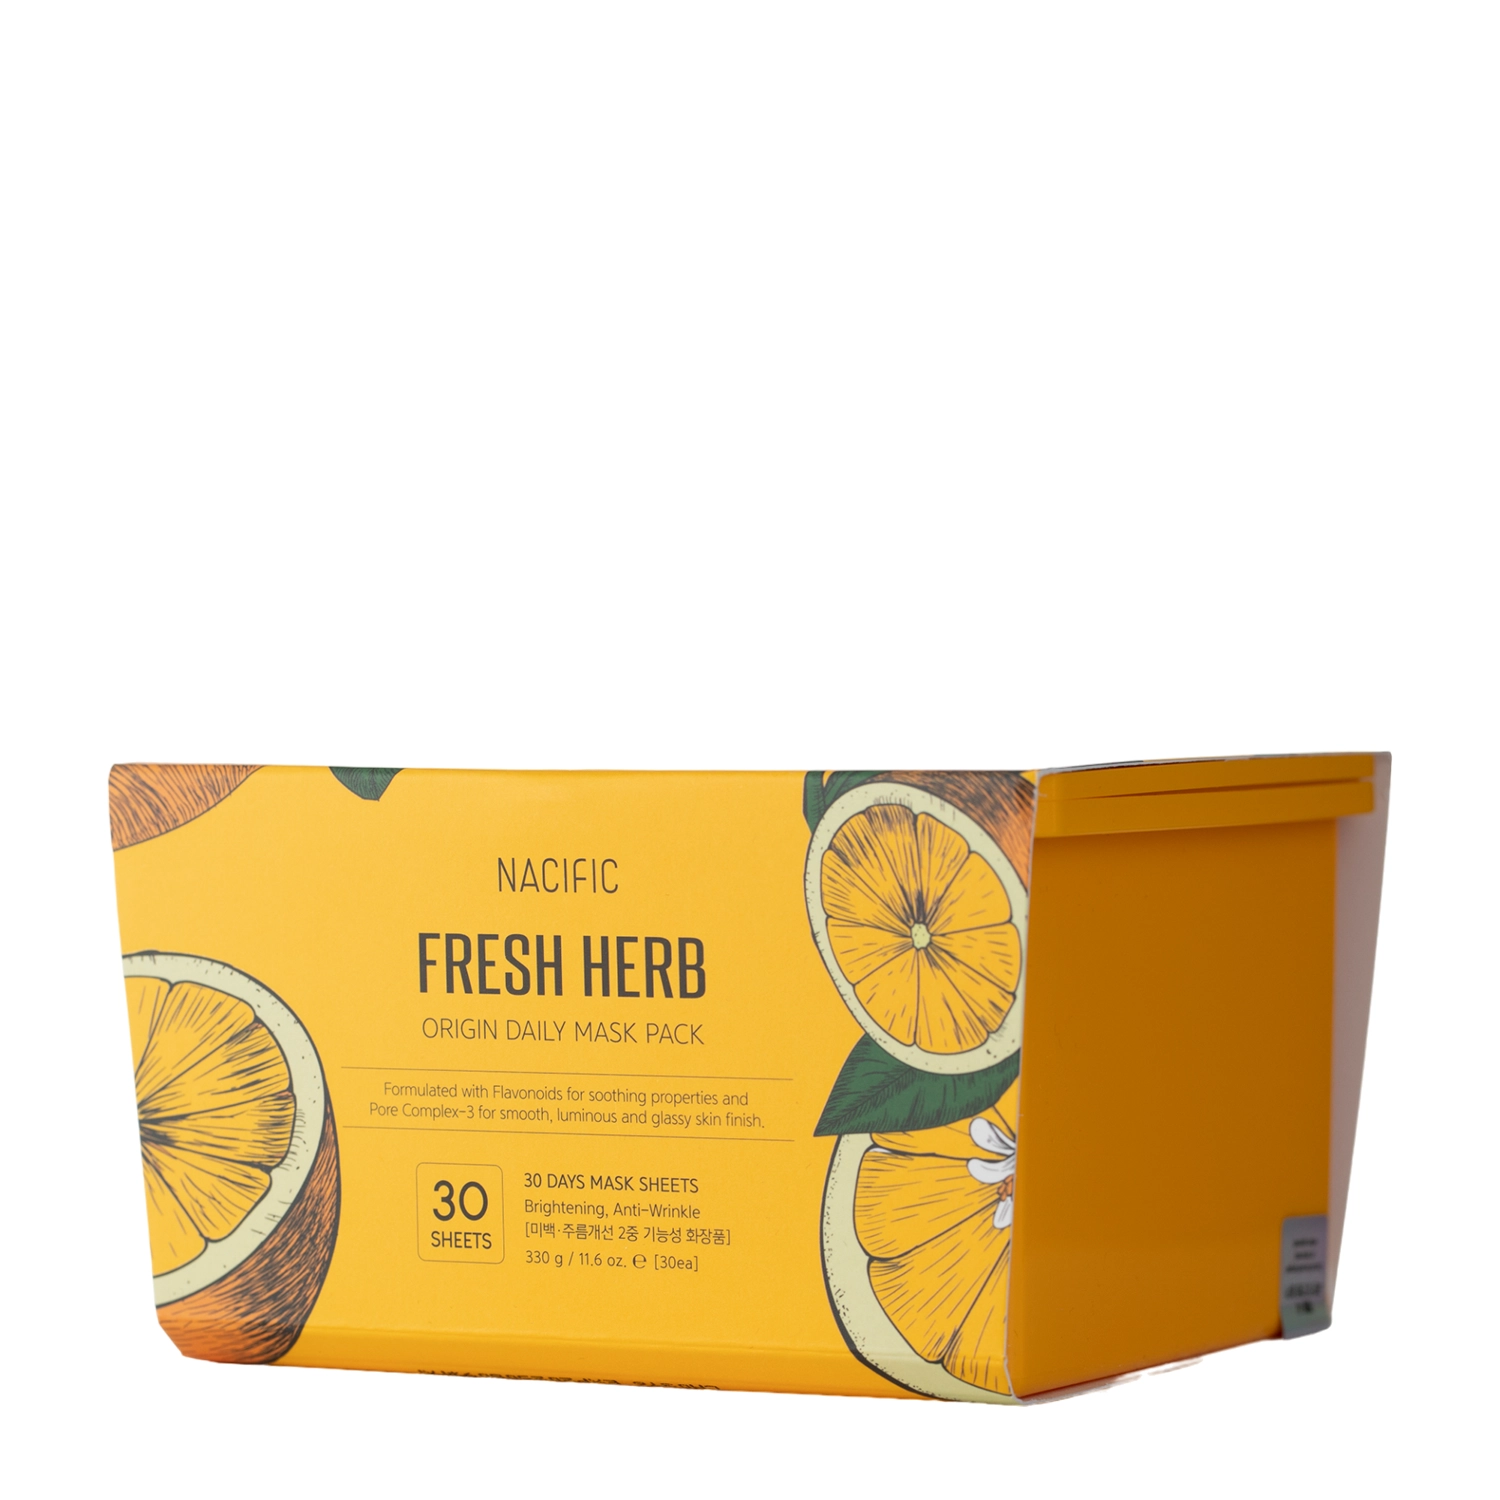 Nacific - Fresh Herb Origin Daily Mask Pack - Набір відновлювальних тканинних масок - 30шт./ 330g